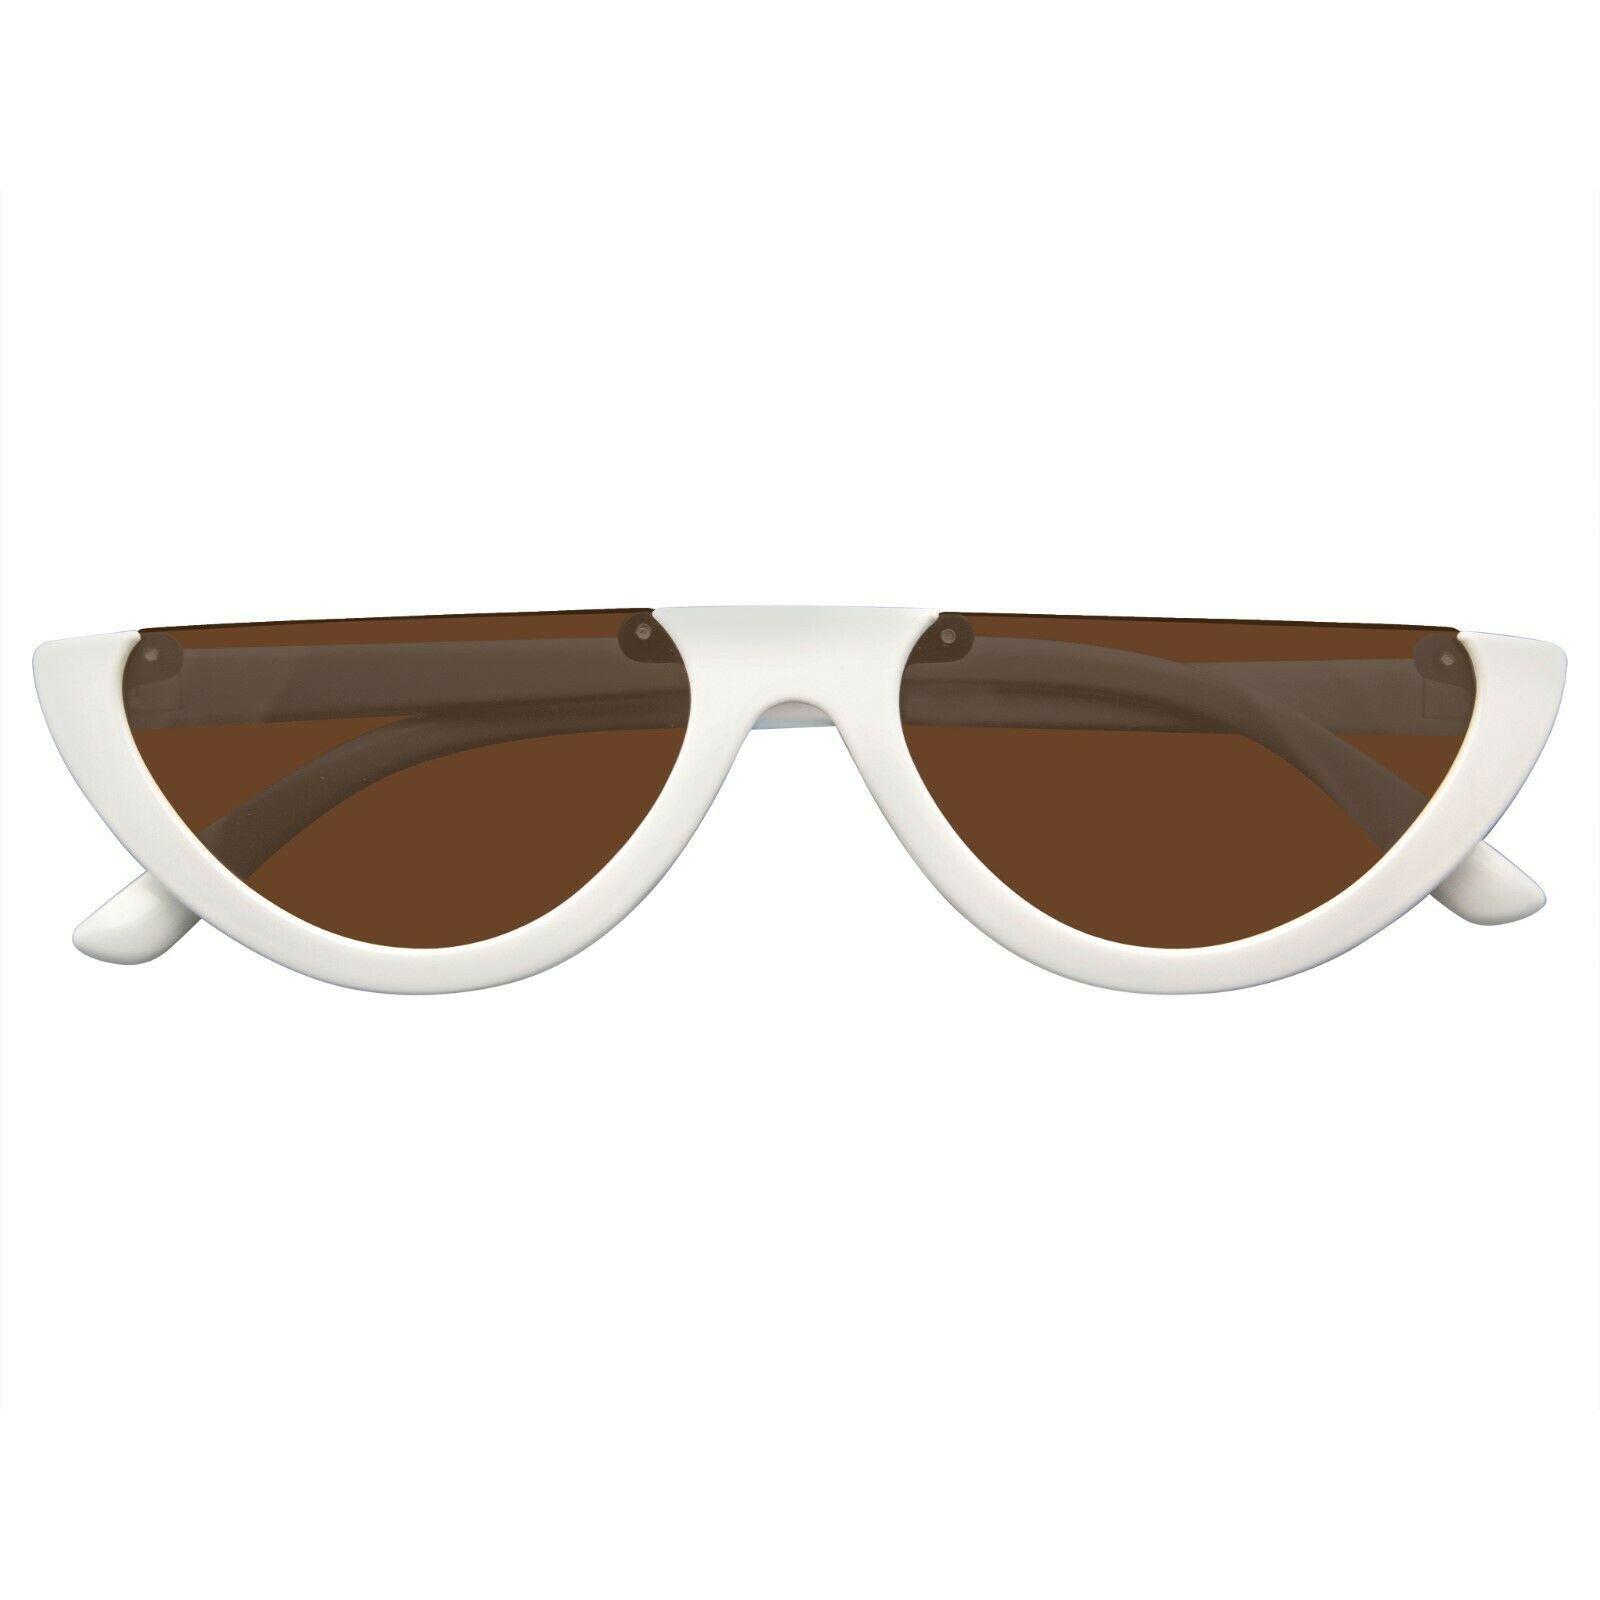 Clout Goggles Cat Eye Sunglasses Vintage Half Mod Style Retro Sunglasses